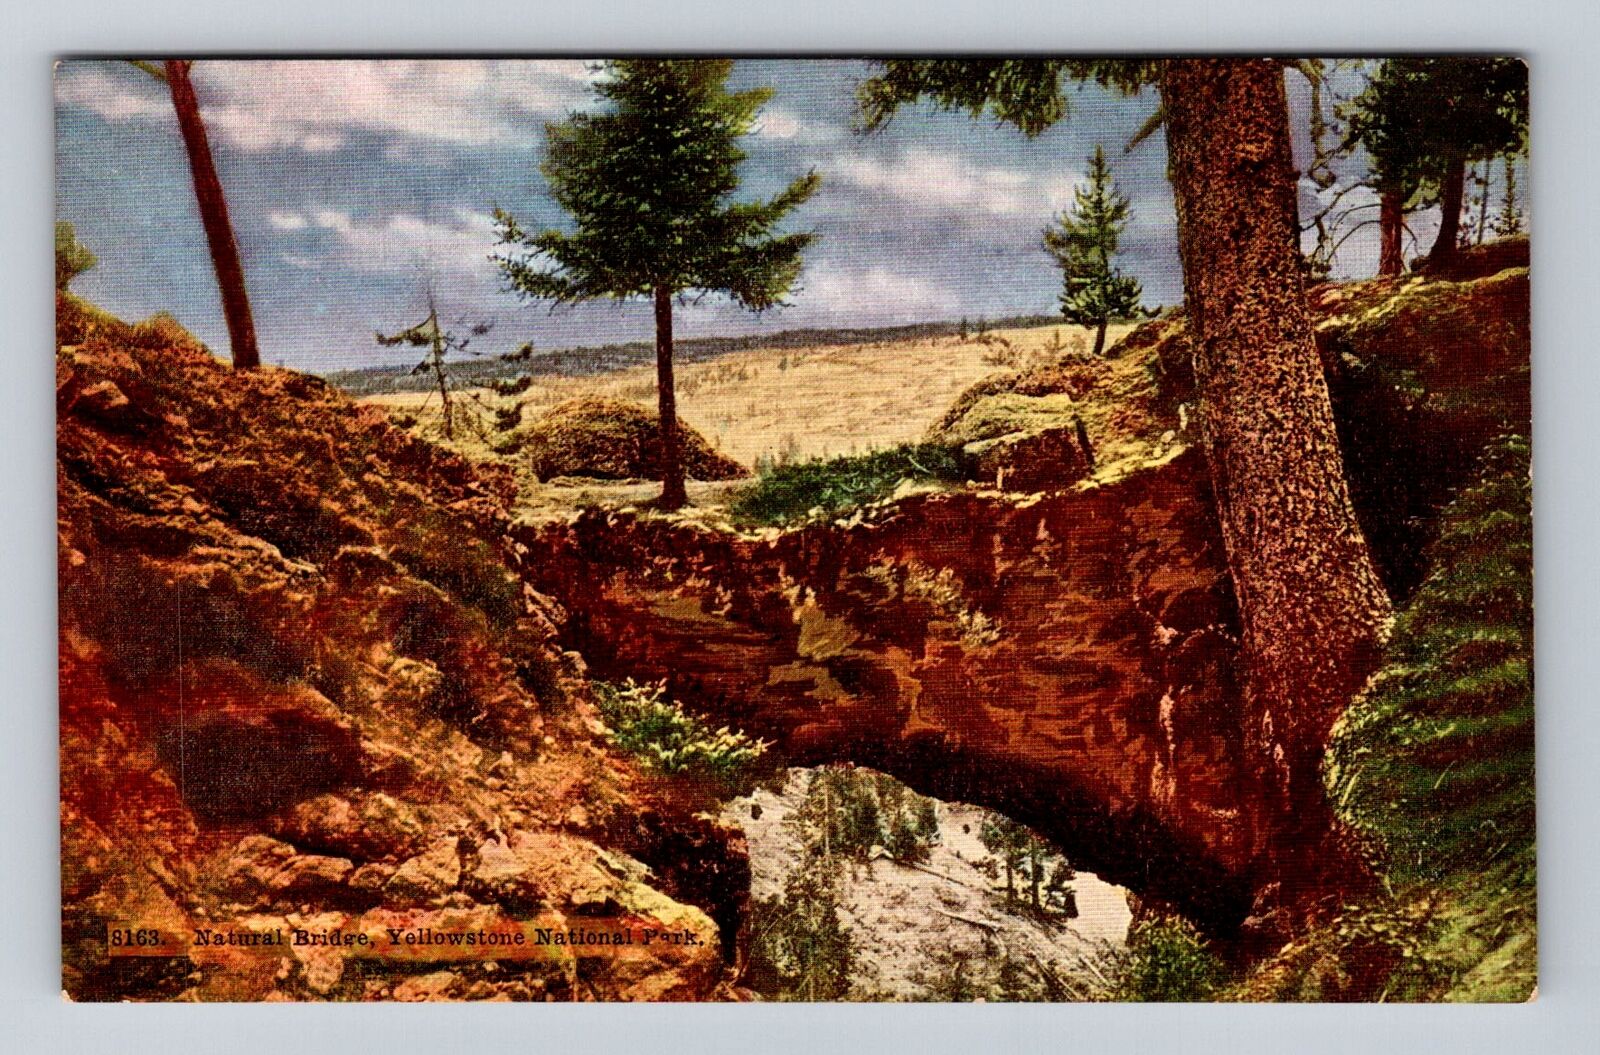 Yellowstone National Park, Natural Bridge, Series #8163 Vintage Postcard